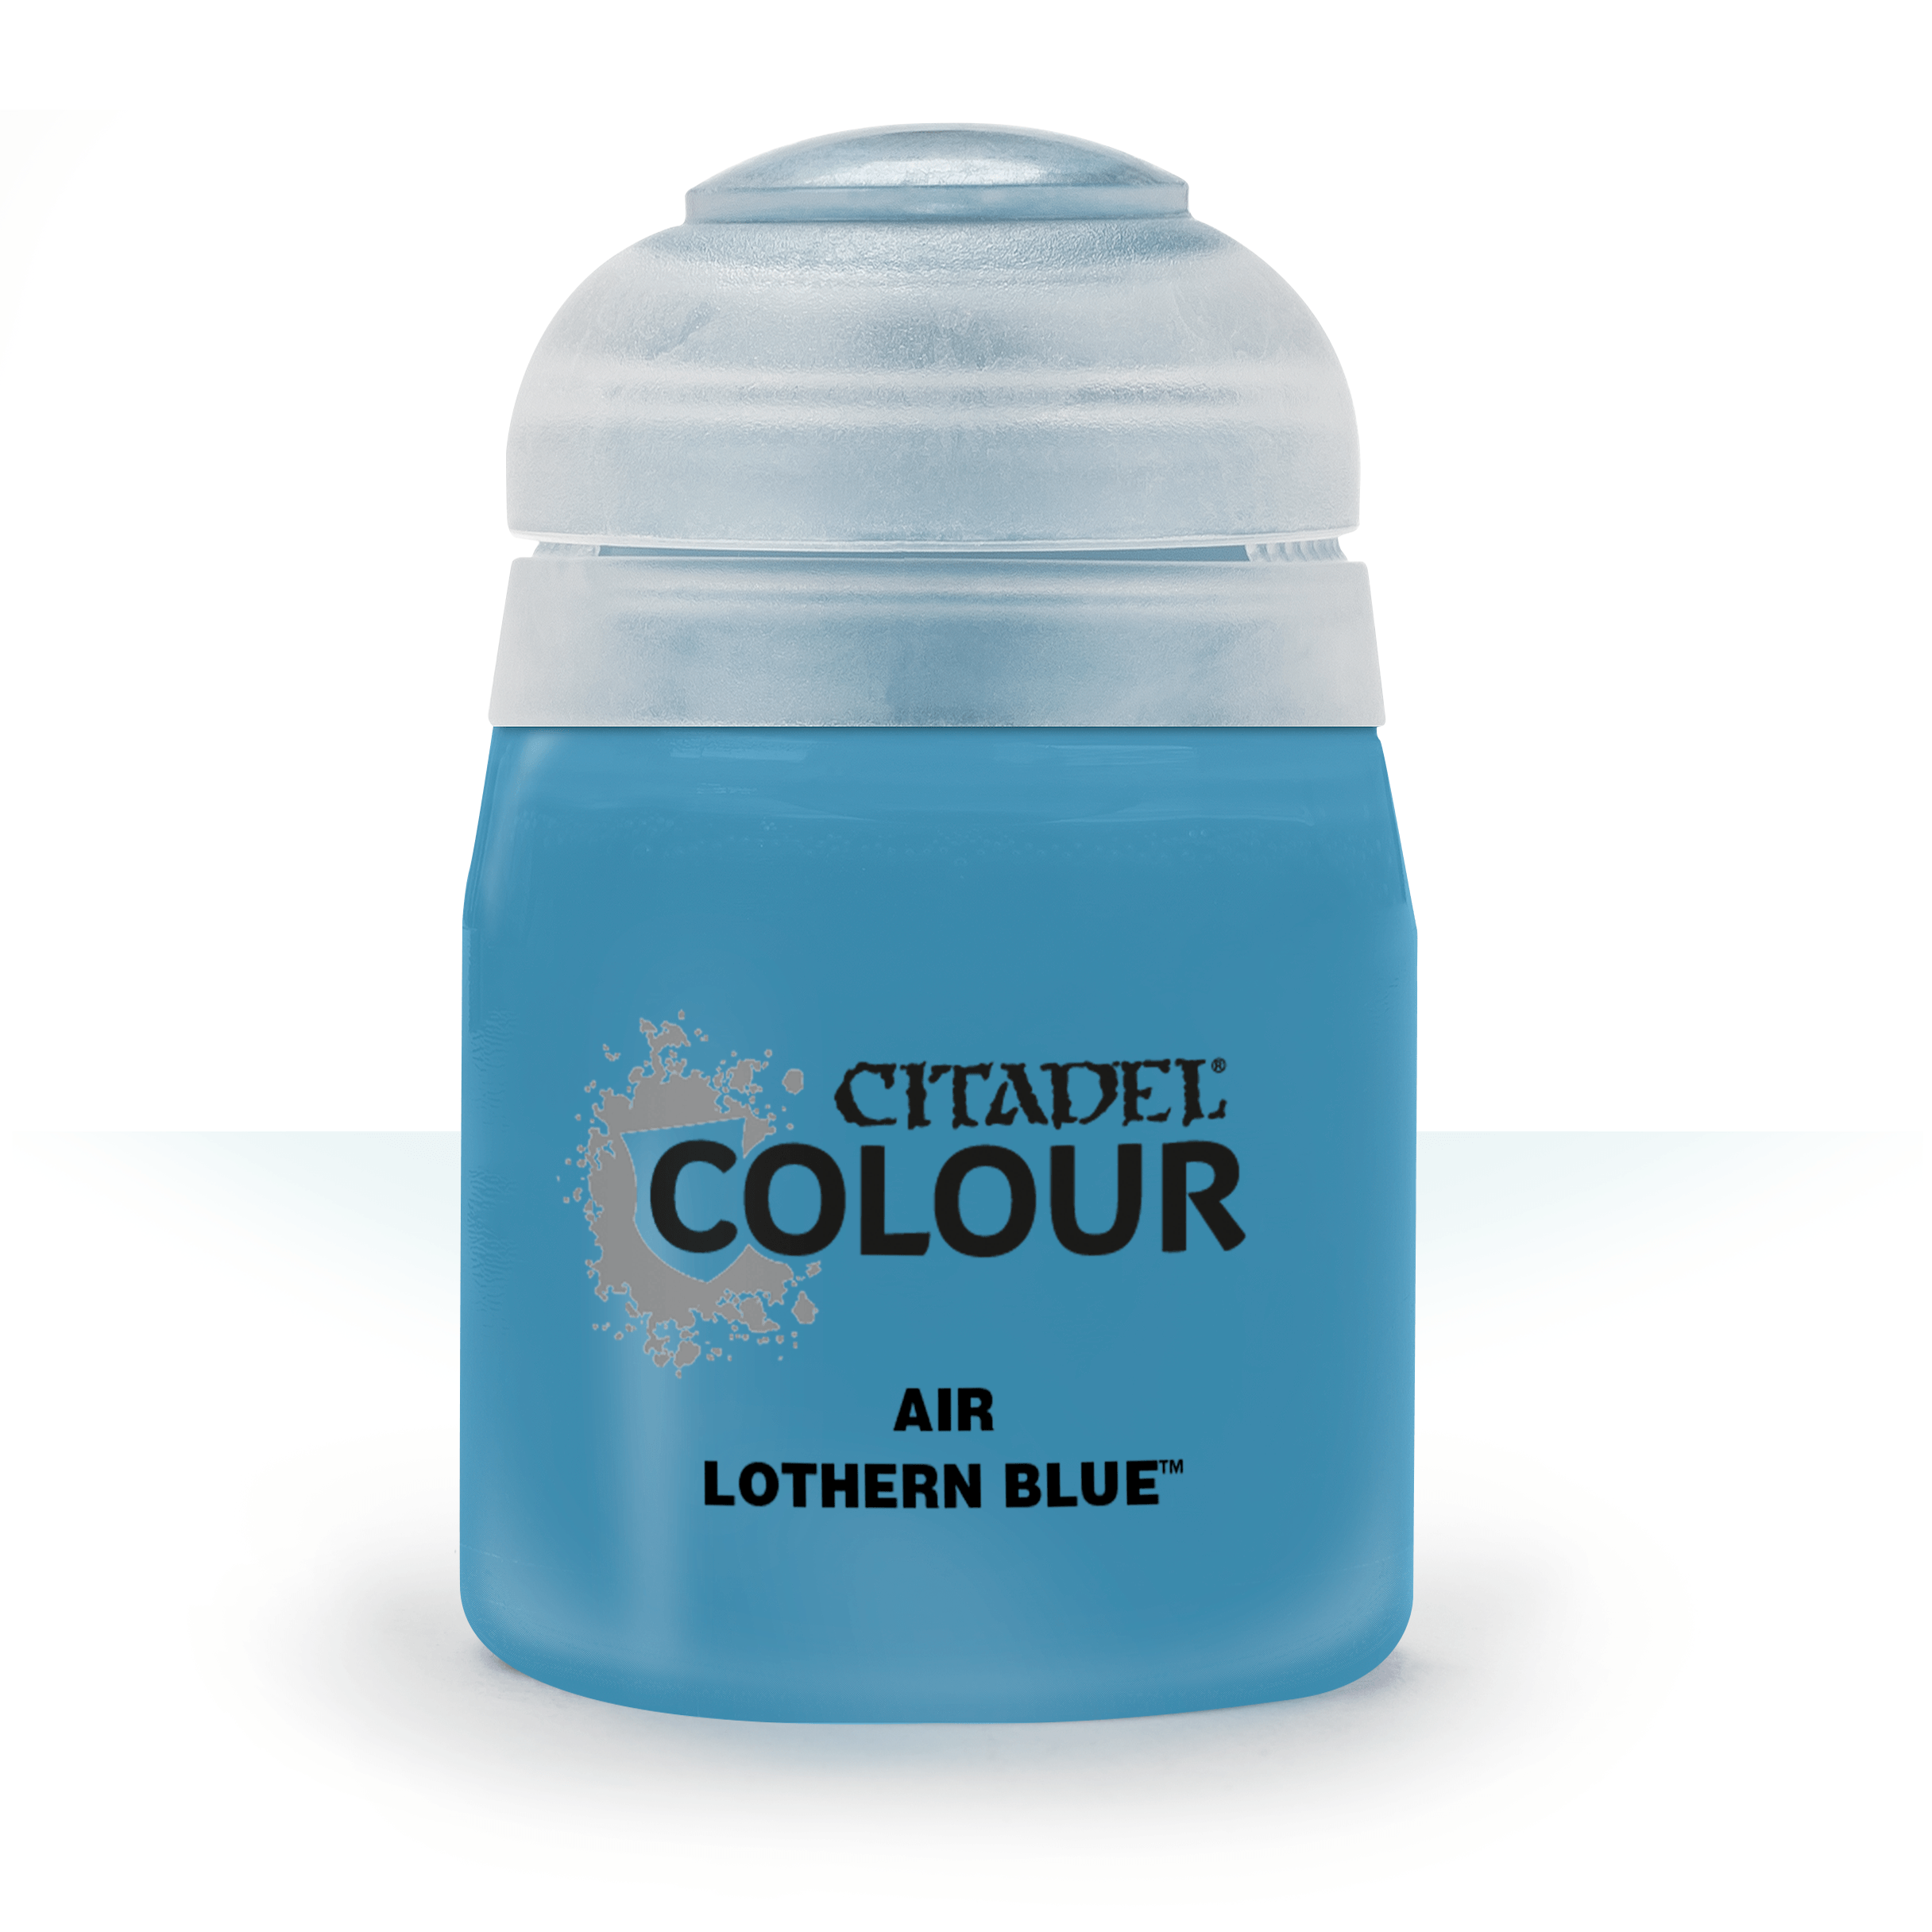 Lothern Blue - Citadel Air Colour